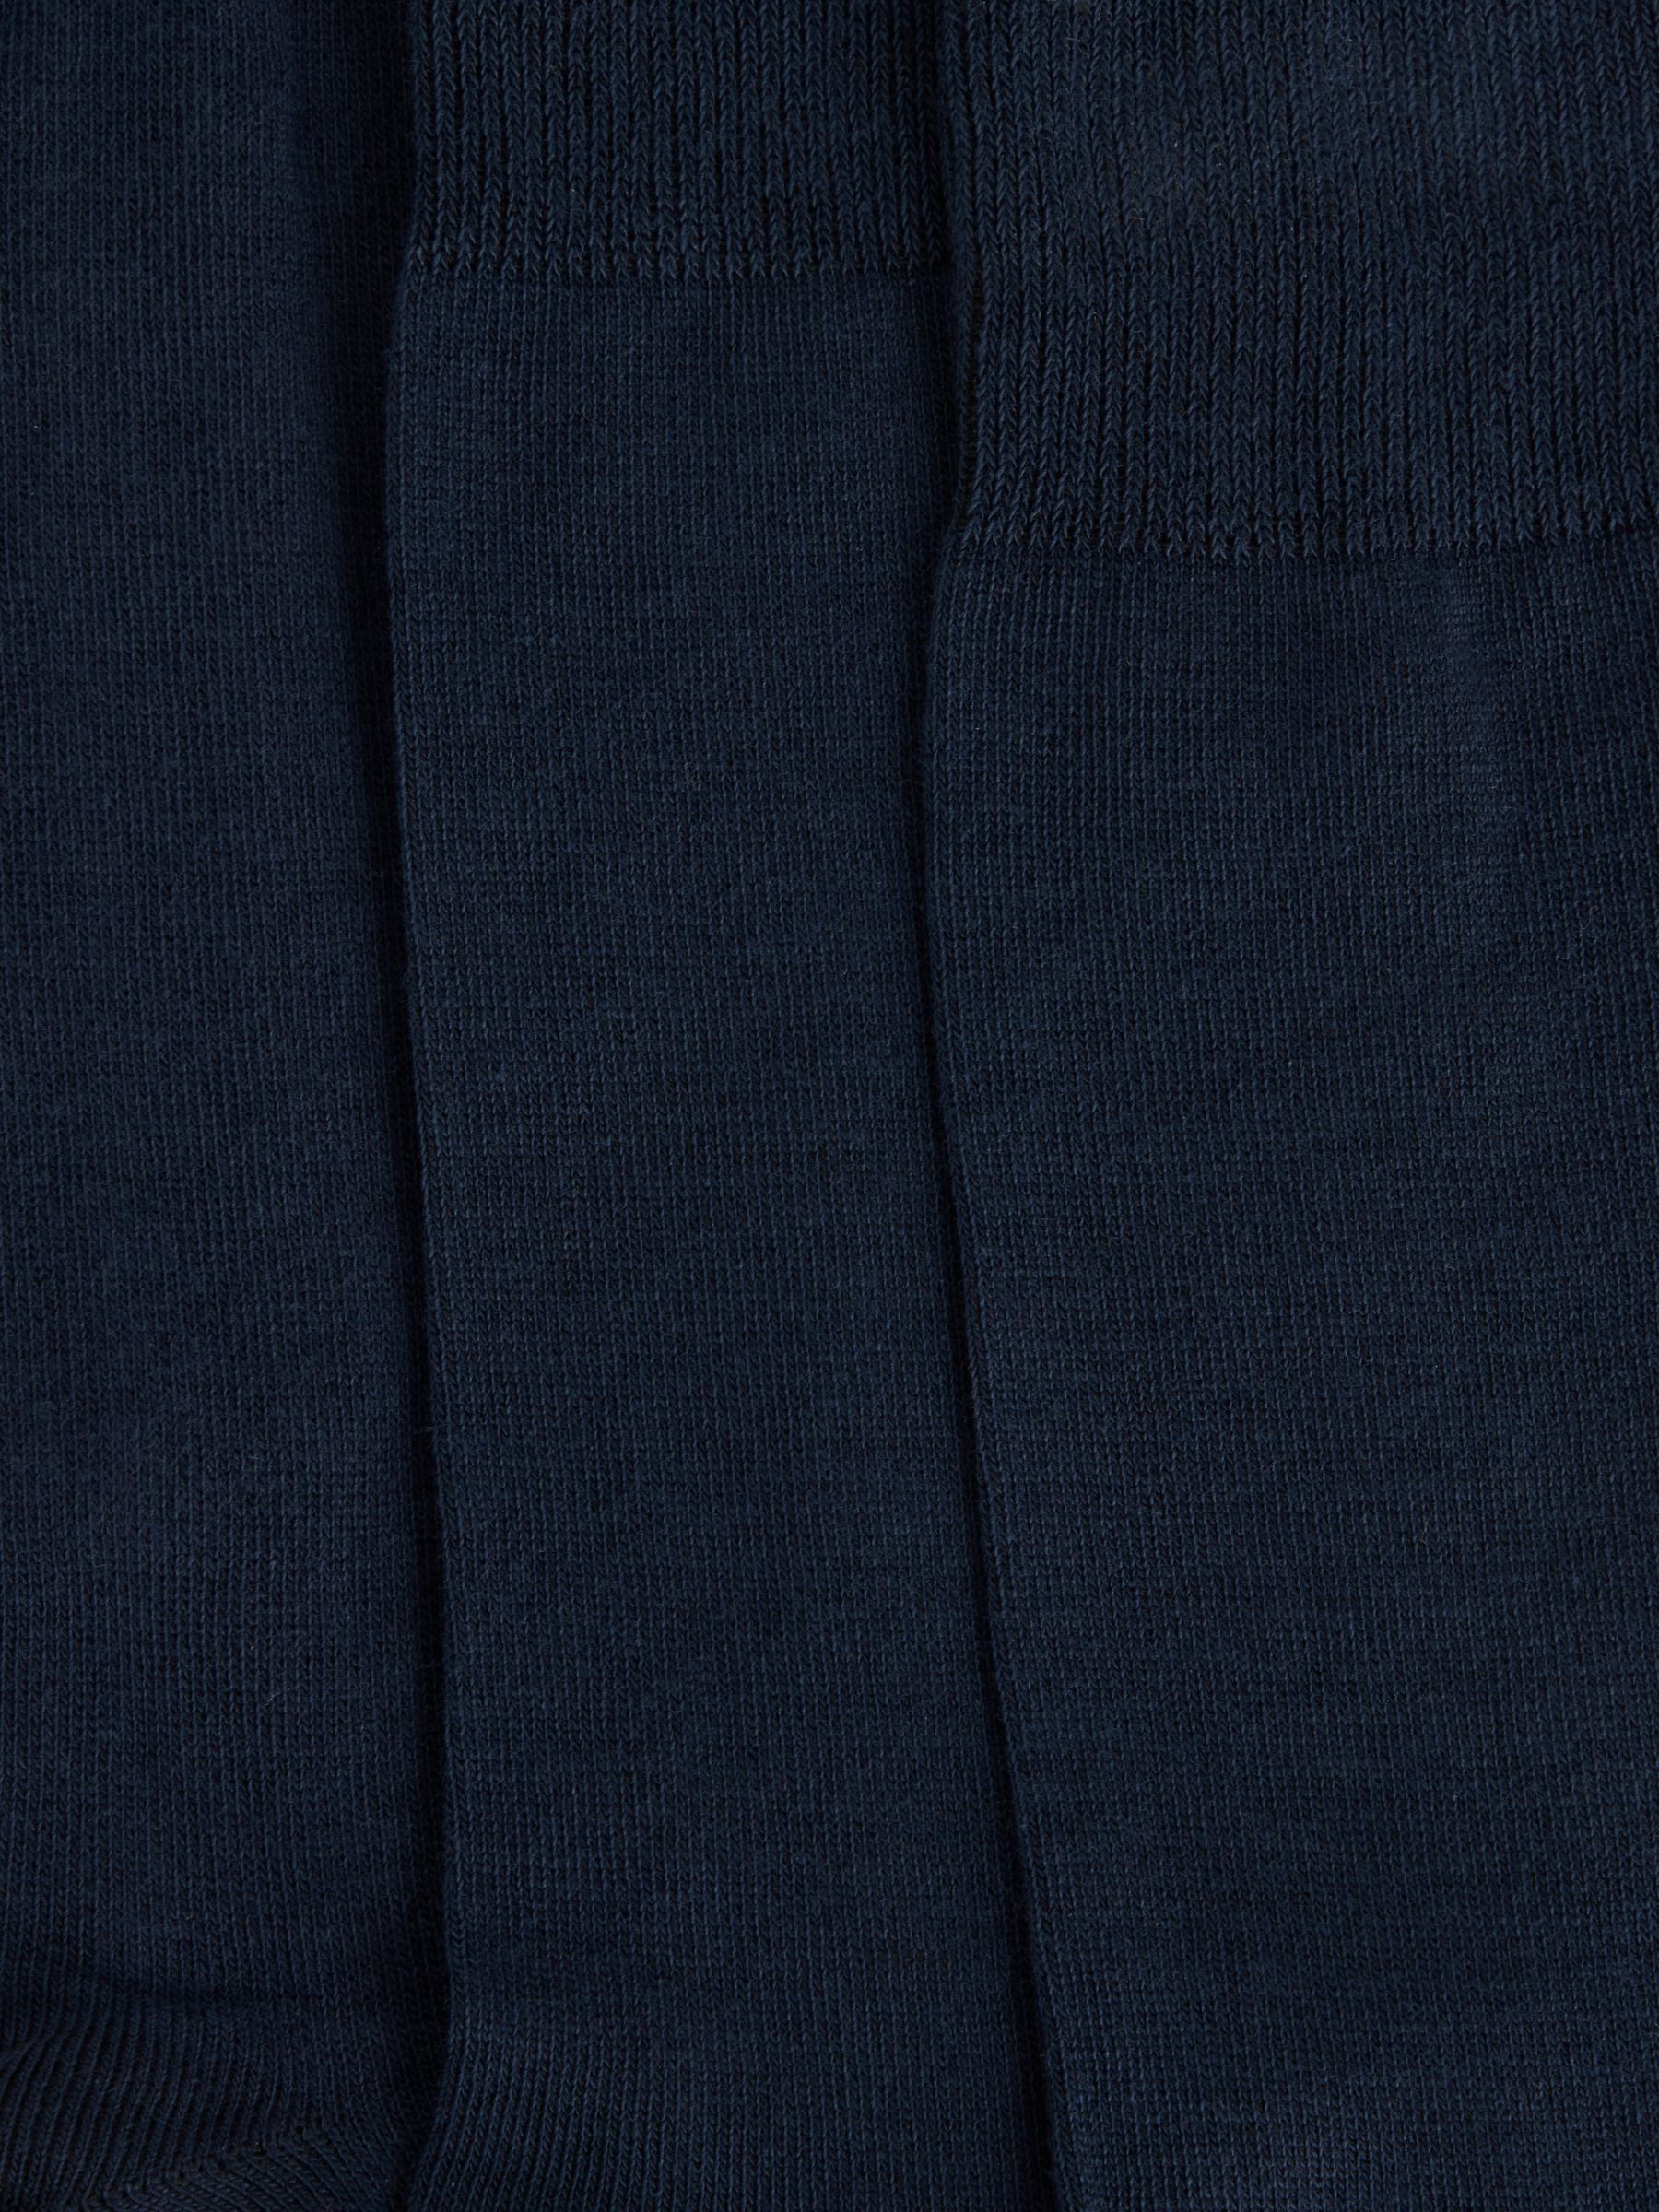 John Lewis ANYDAY Cotton Rich Plain Men's Socks, Pack of 5, Blue Navy, M